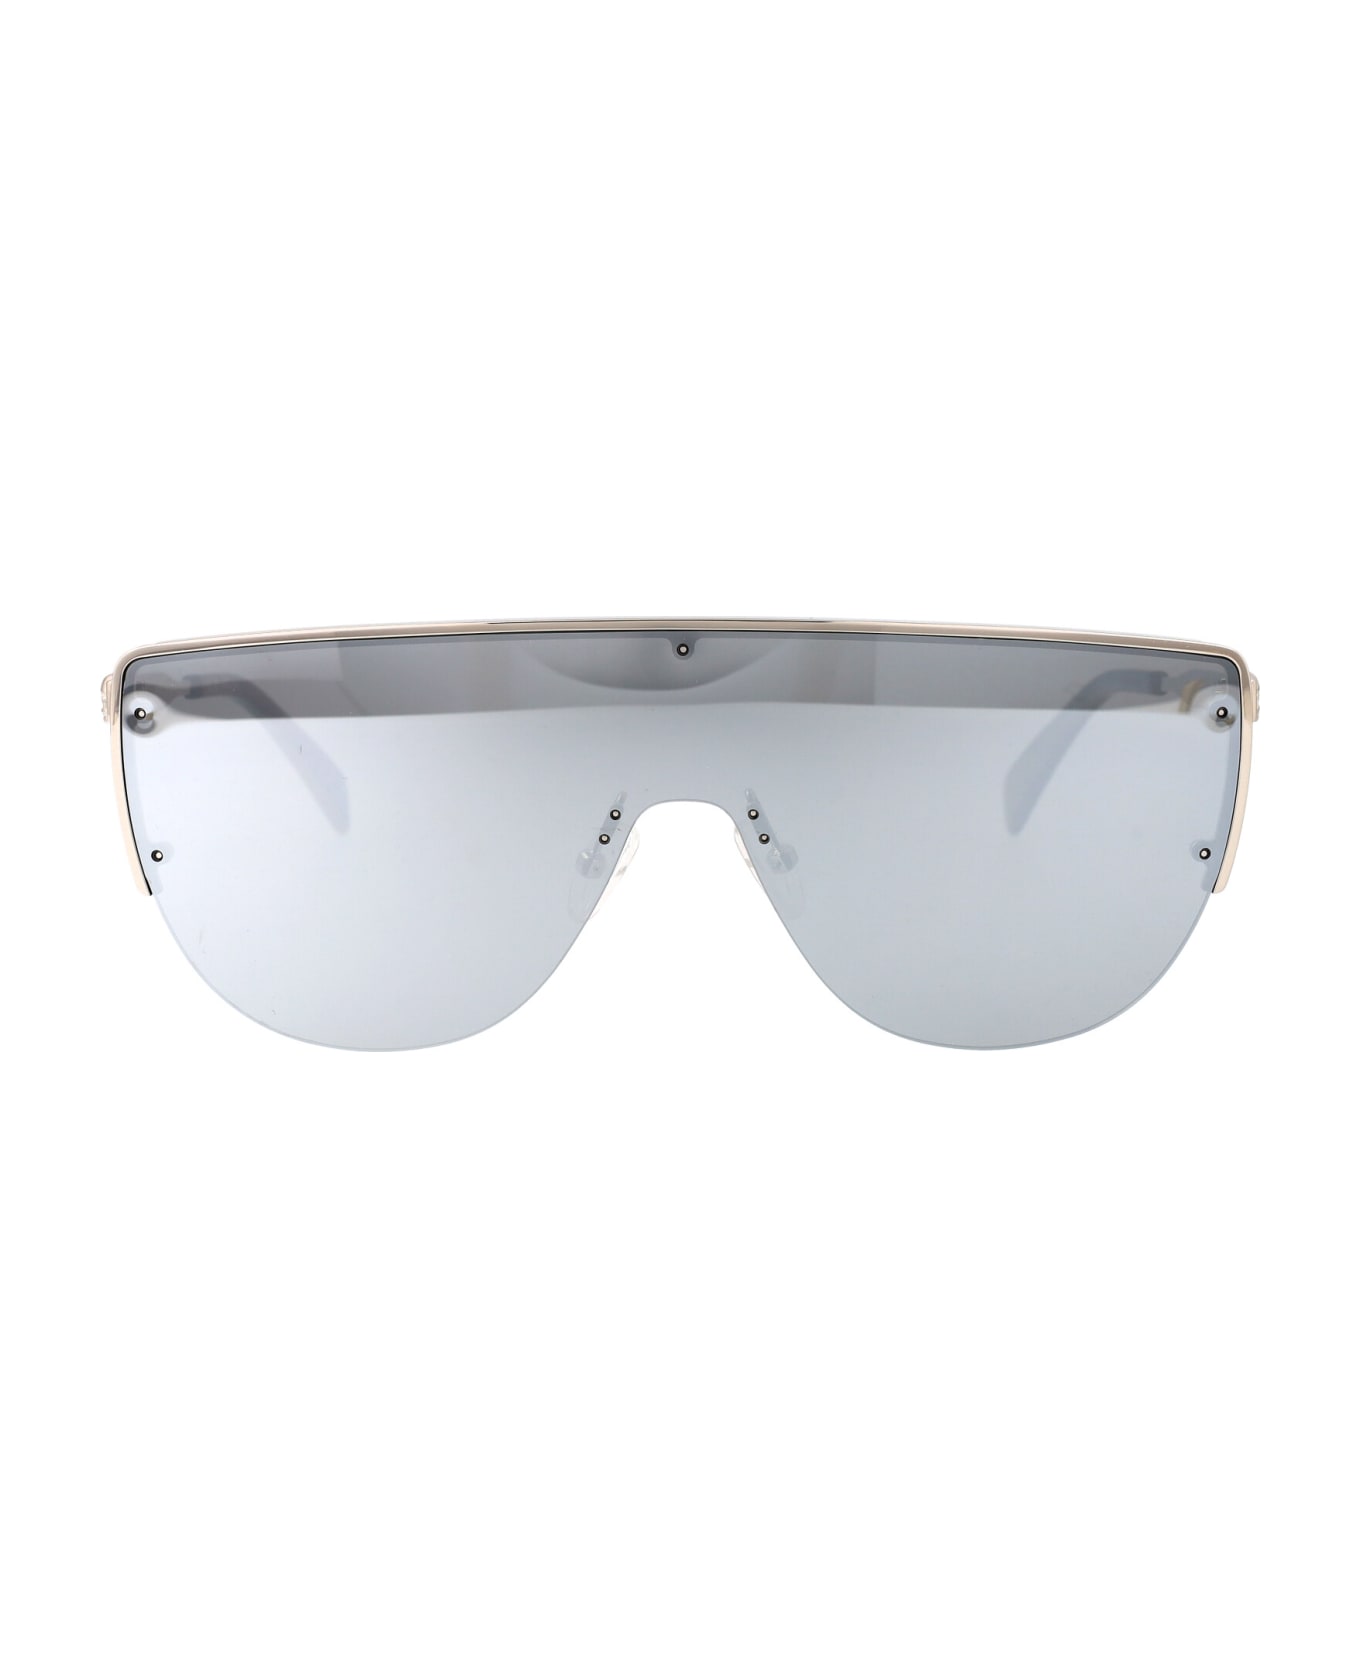 Alexander McQueen Eyewear Am0457s Sunglasses - 004 SILVER SILVER SILVER サングラス